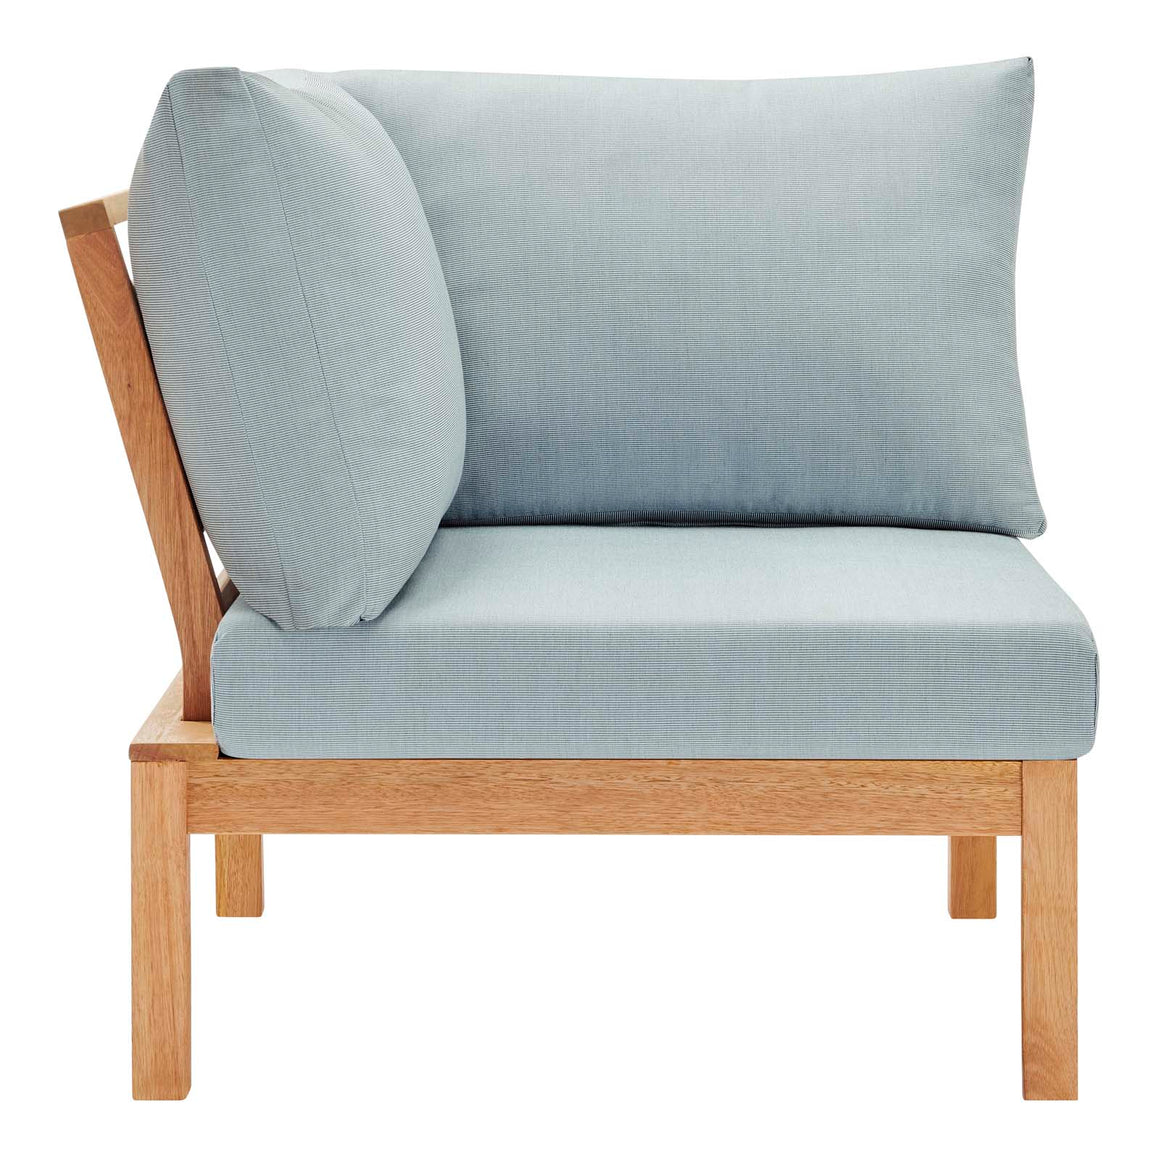 Freeport Karri Wood Sectional Sofa Outdoor Patio Corner Chair Natural Light Blue